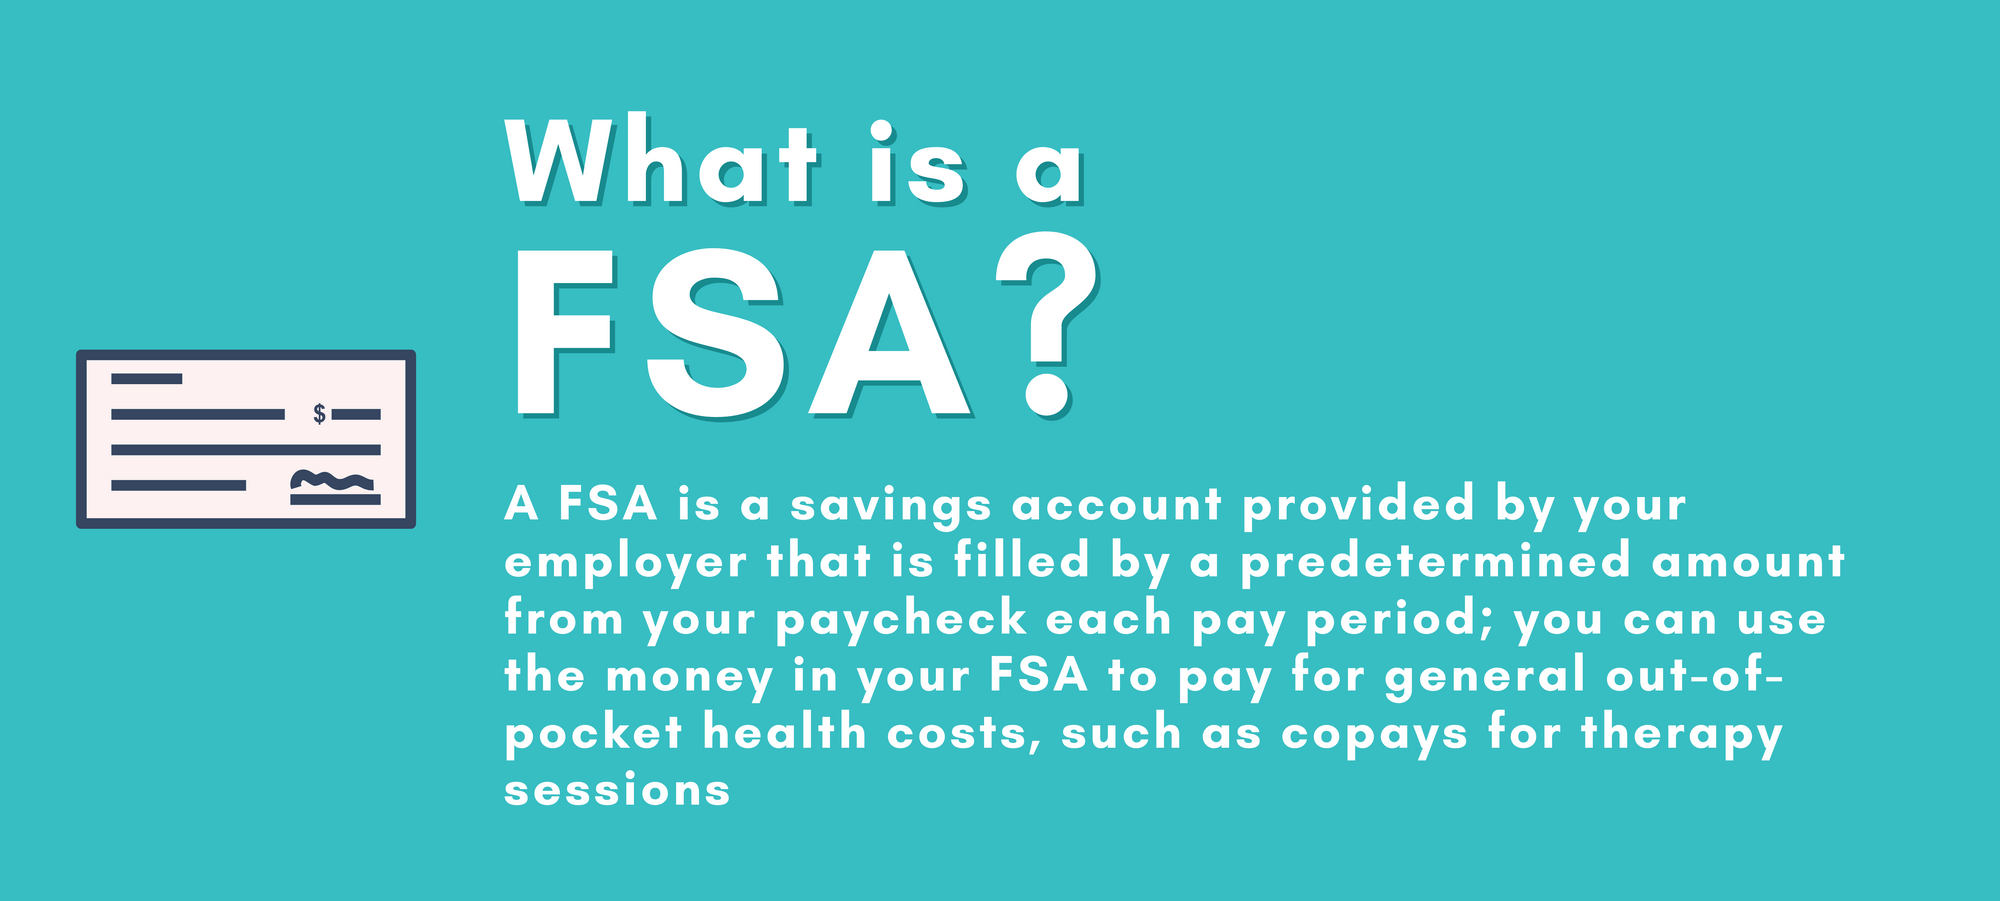 Flexible Spending Account (FSA), BRI